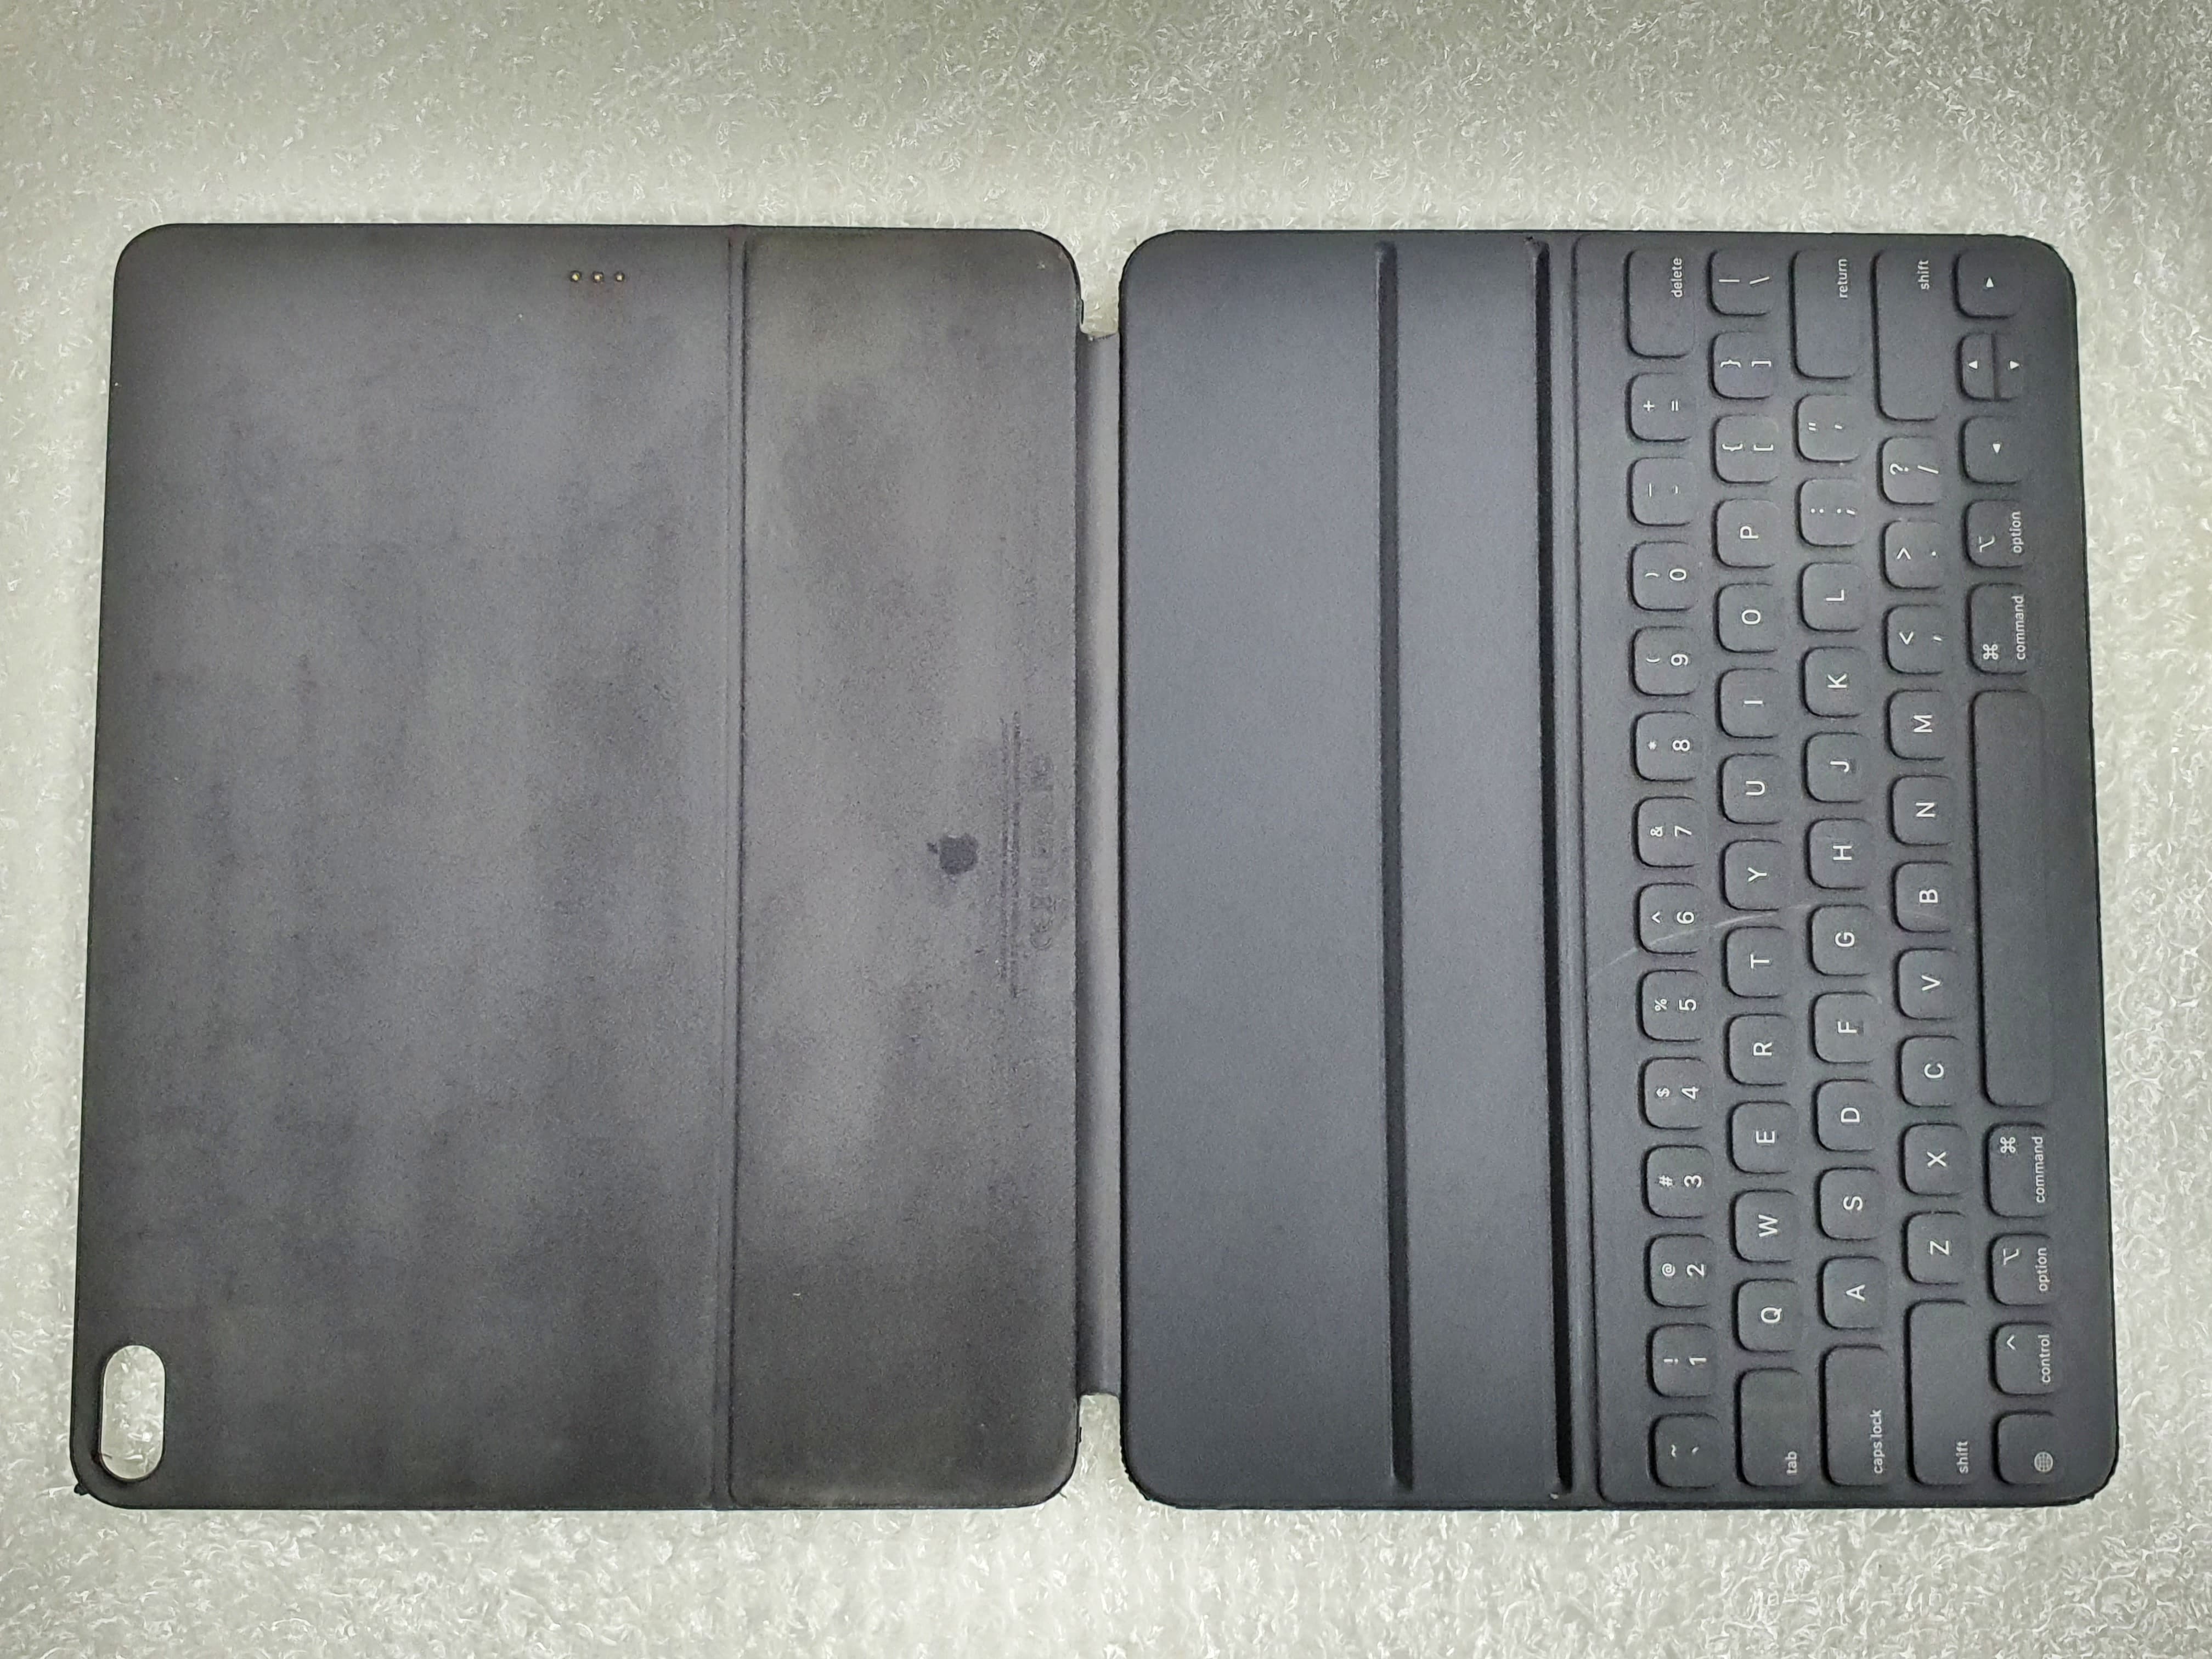 Apple A2039 3rd Generation Smart Keyboard Folio for iPad Pro 12.9-inch